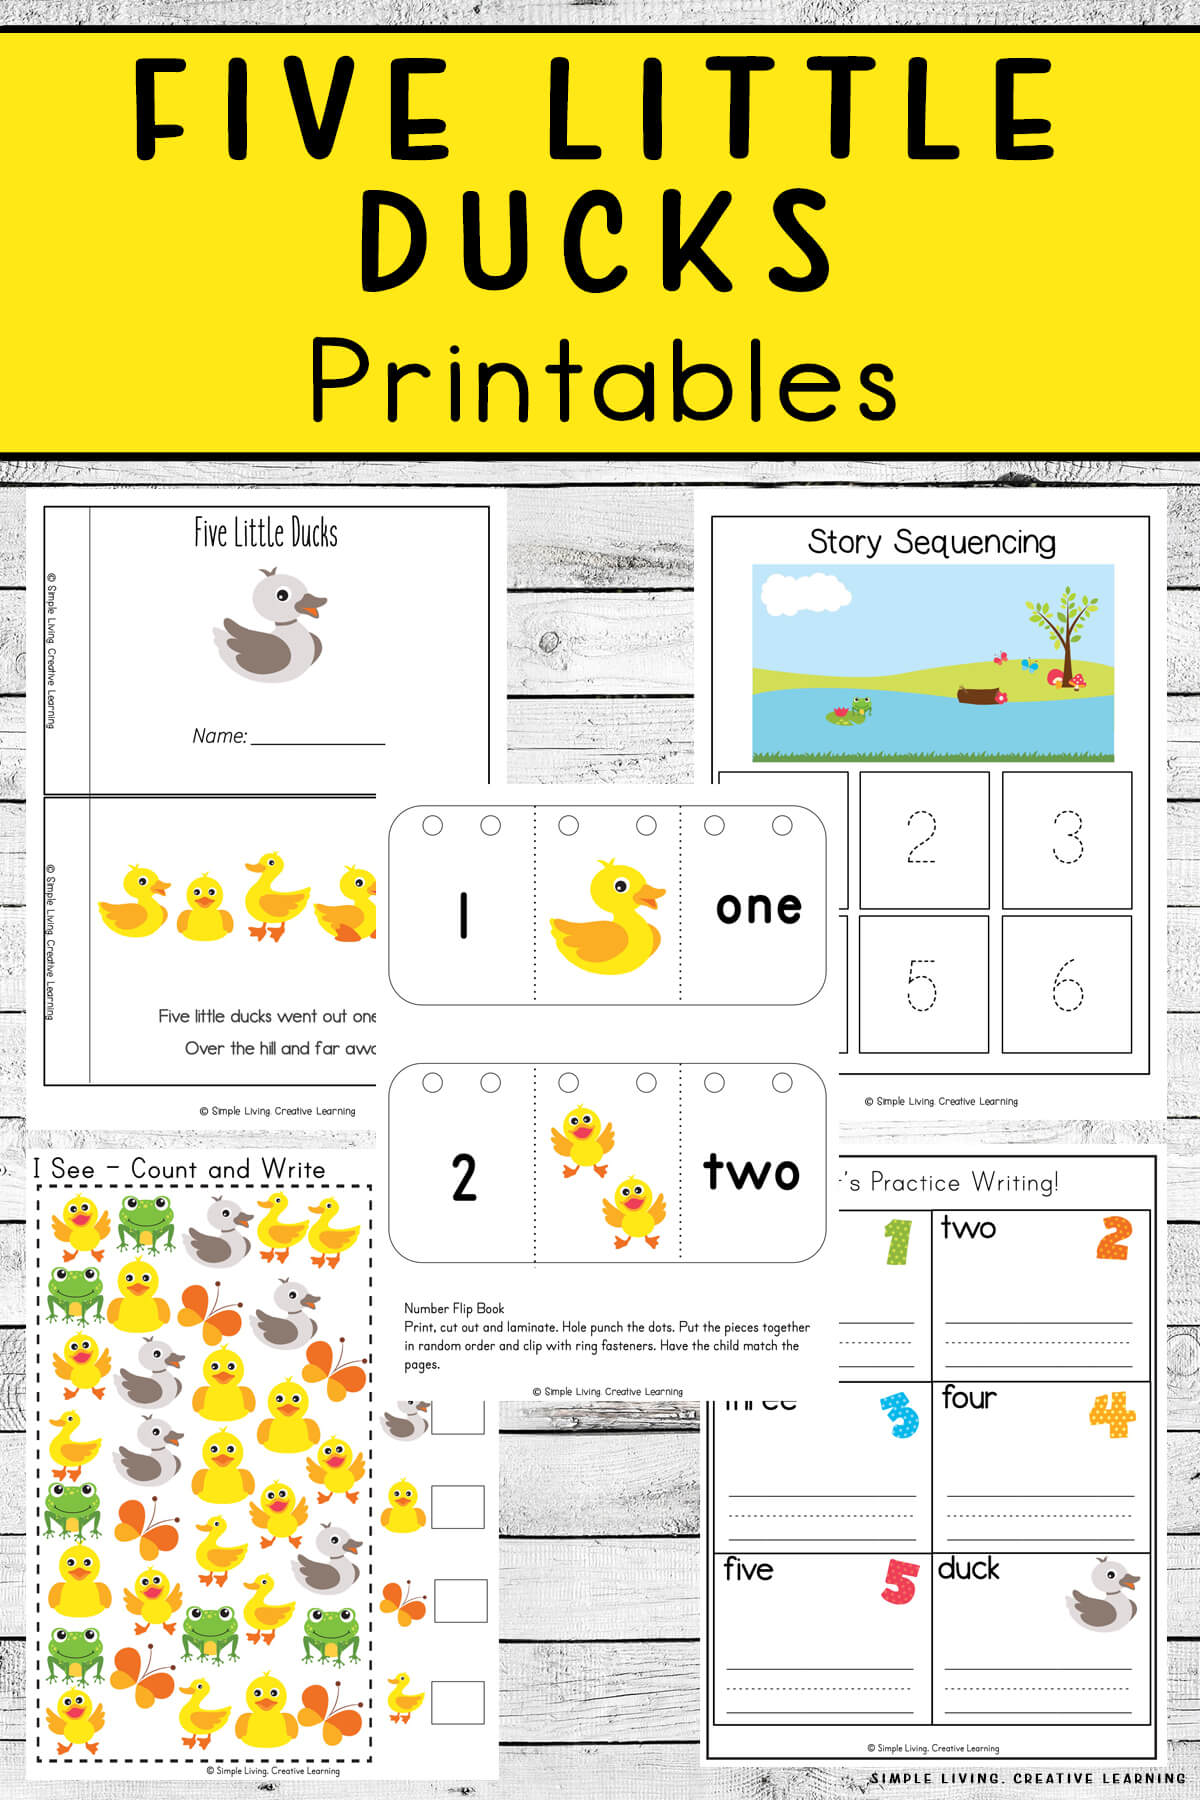 Five Little Ducks Printables